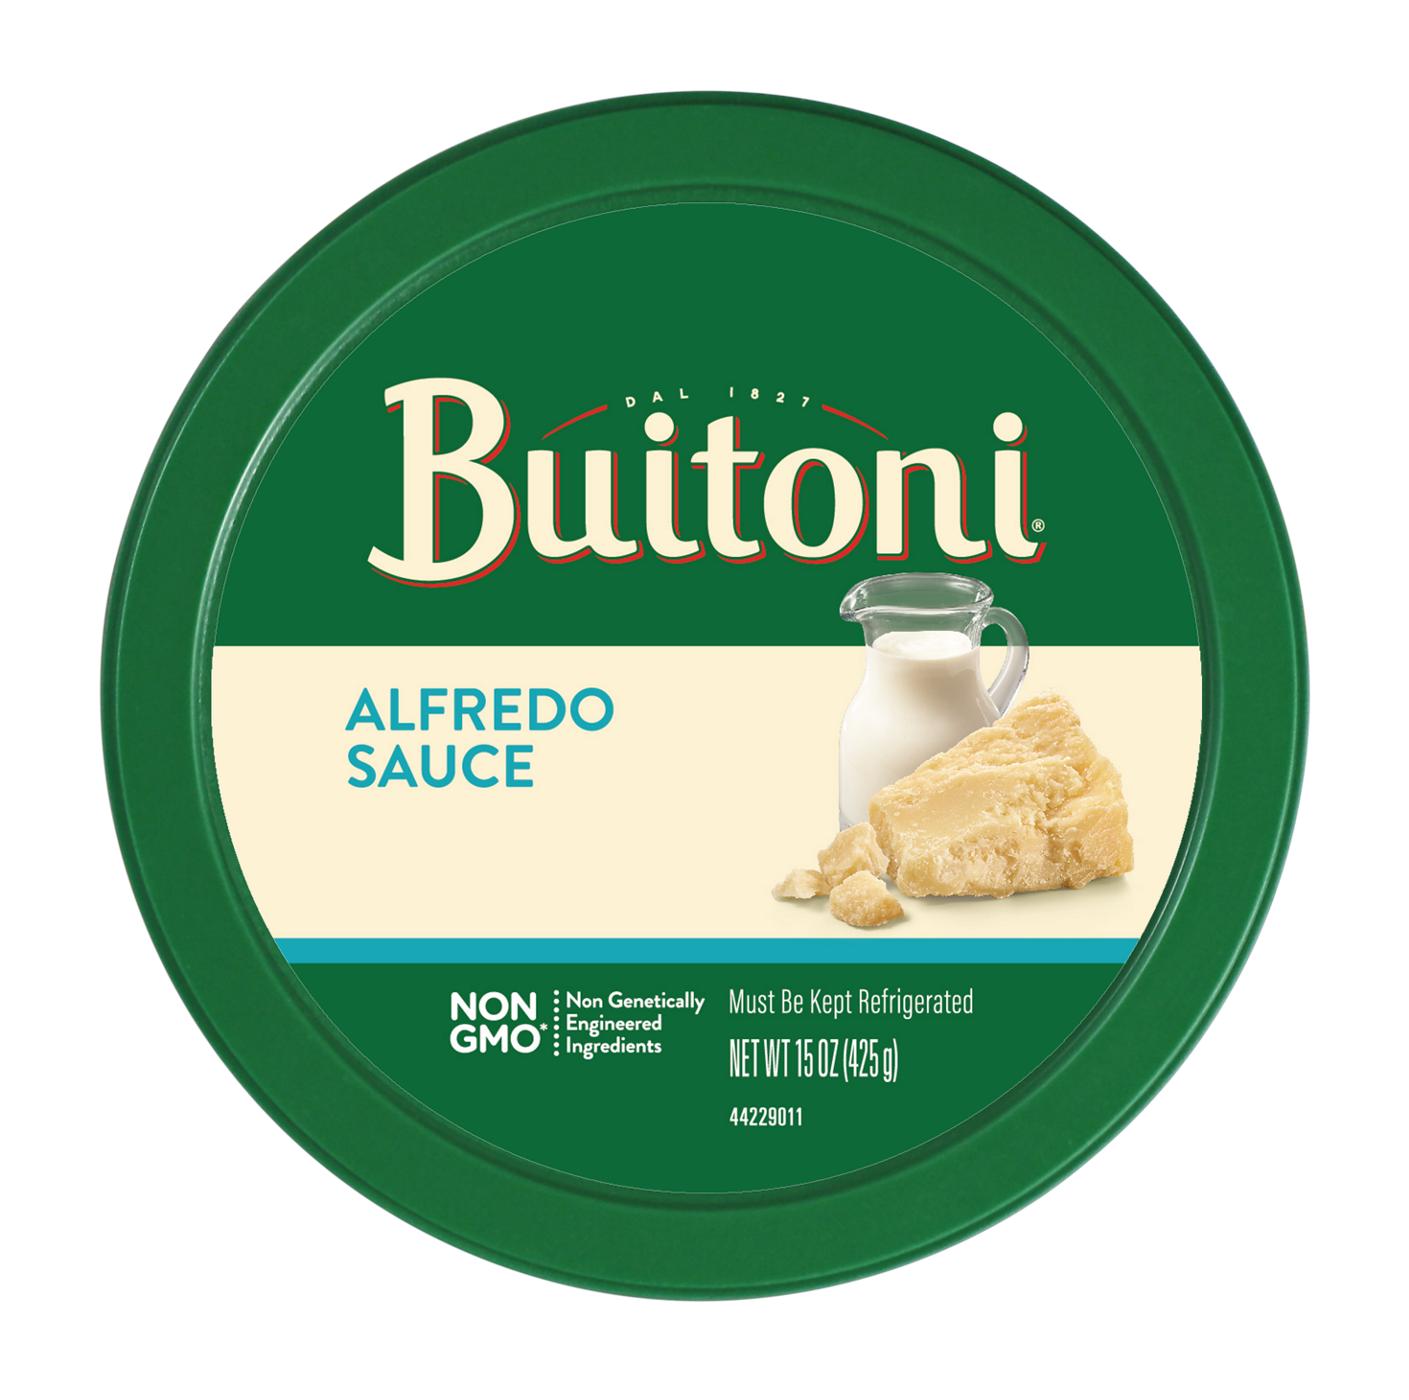 Buitoni Alfredo Sauce; image 9 of 9